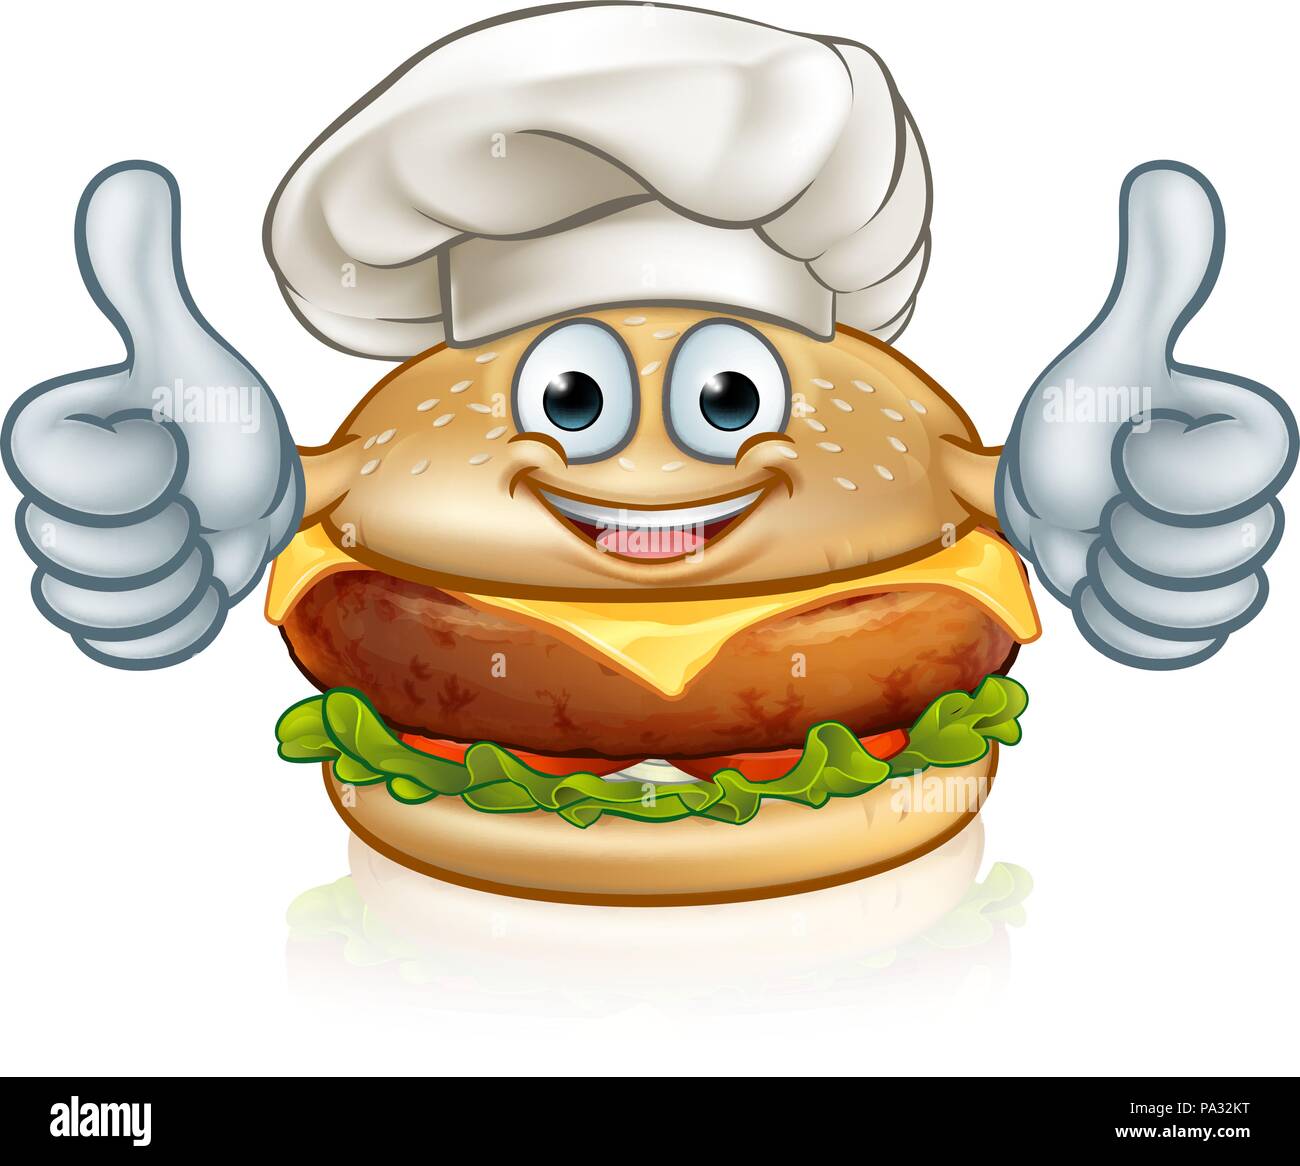 Burger Chef Food Personnage Mascot Illustration de Vecteur